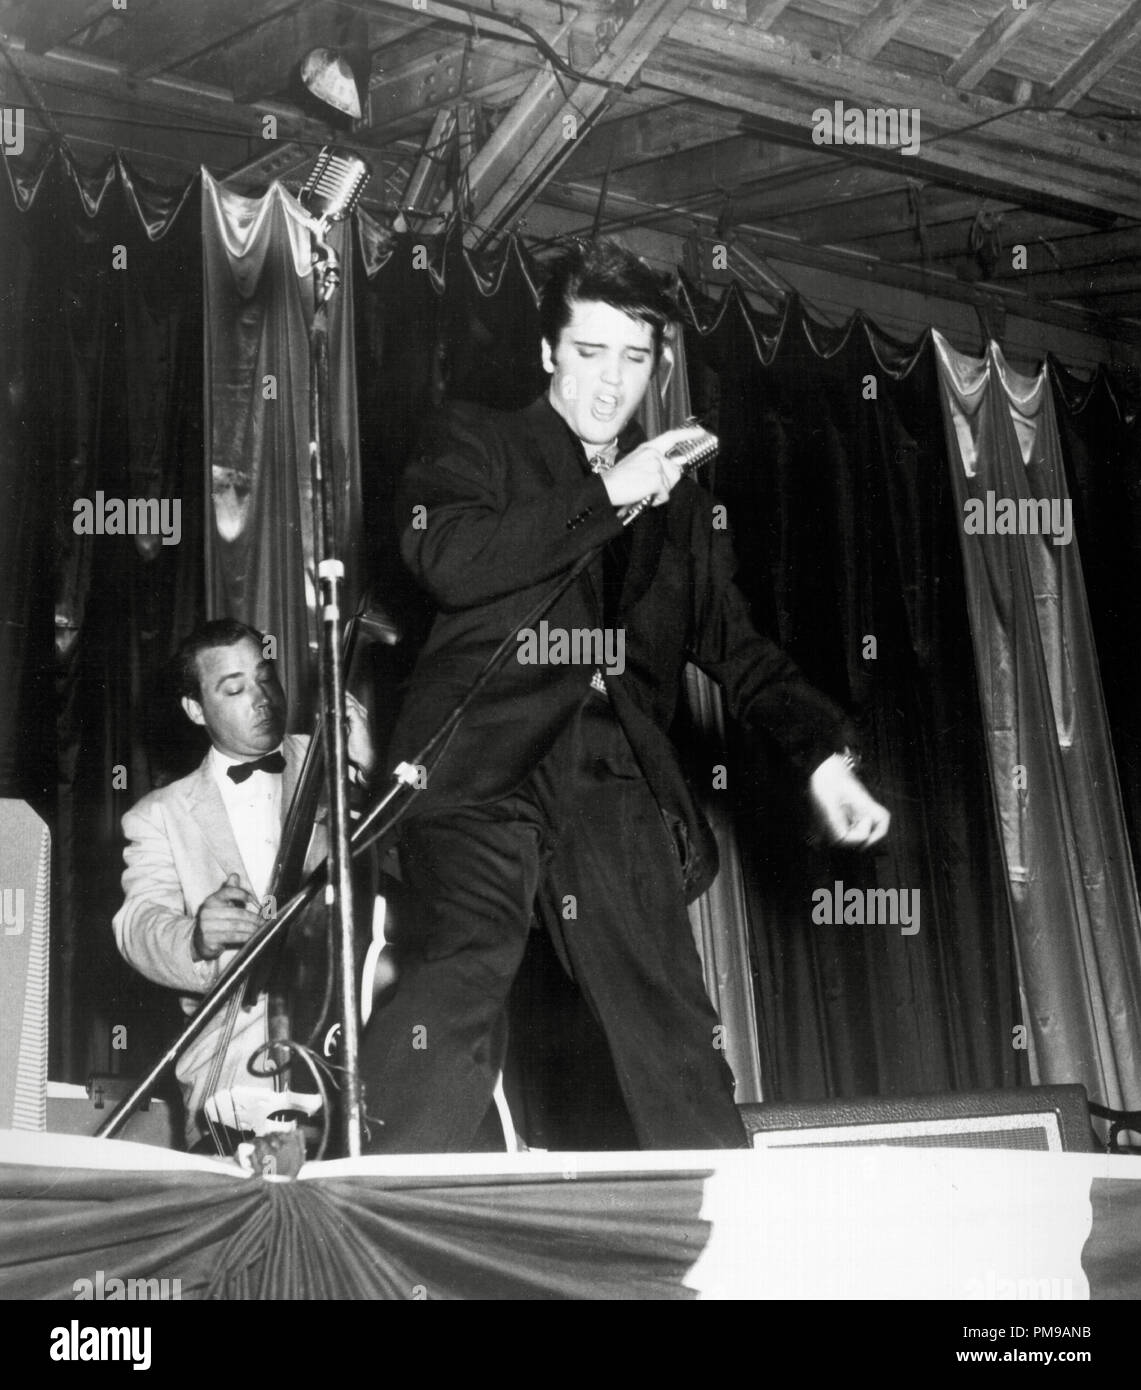 Elvis Presley, circa 1950 - RCA Publicity    File Reference # 31955 115THA Stock Photo